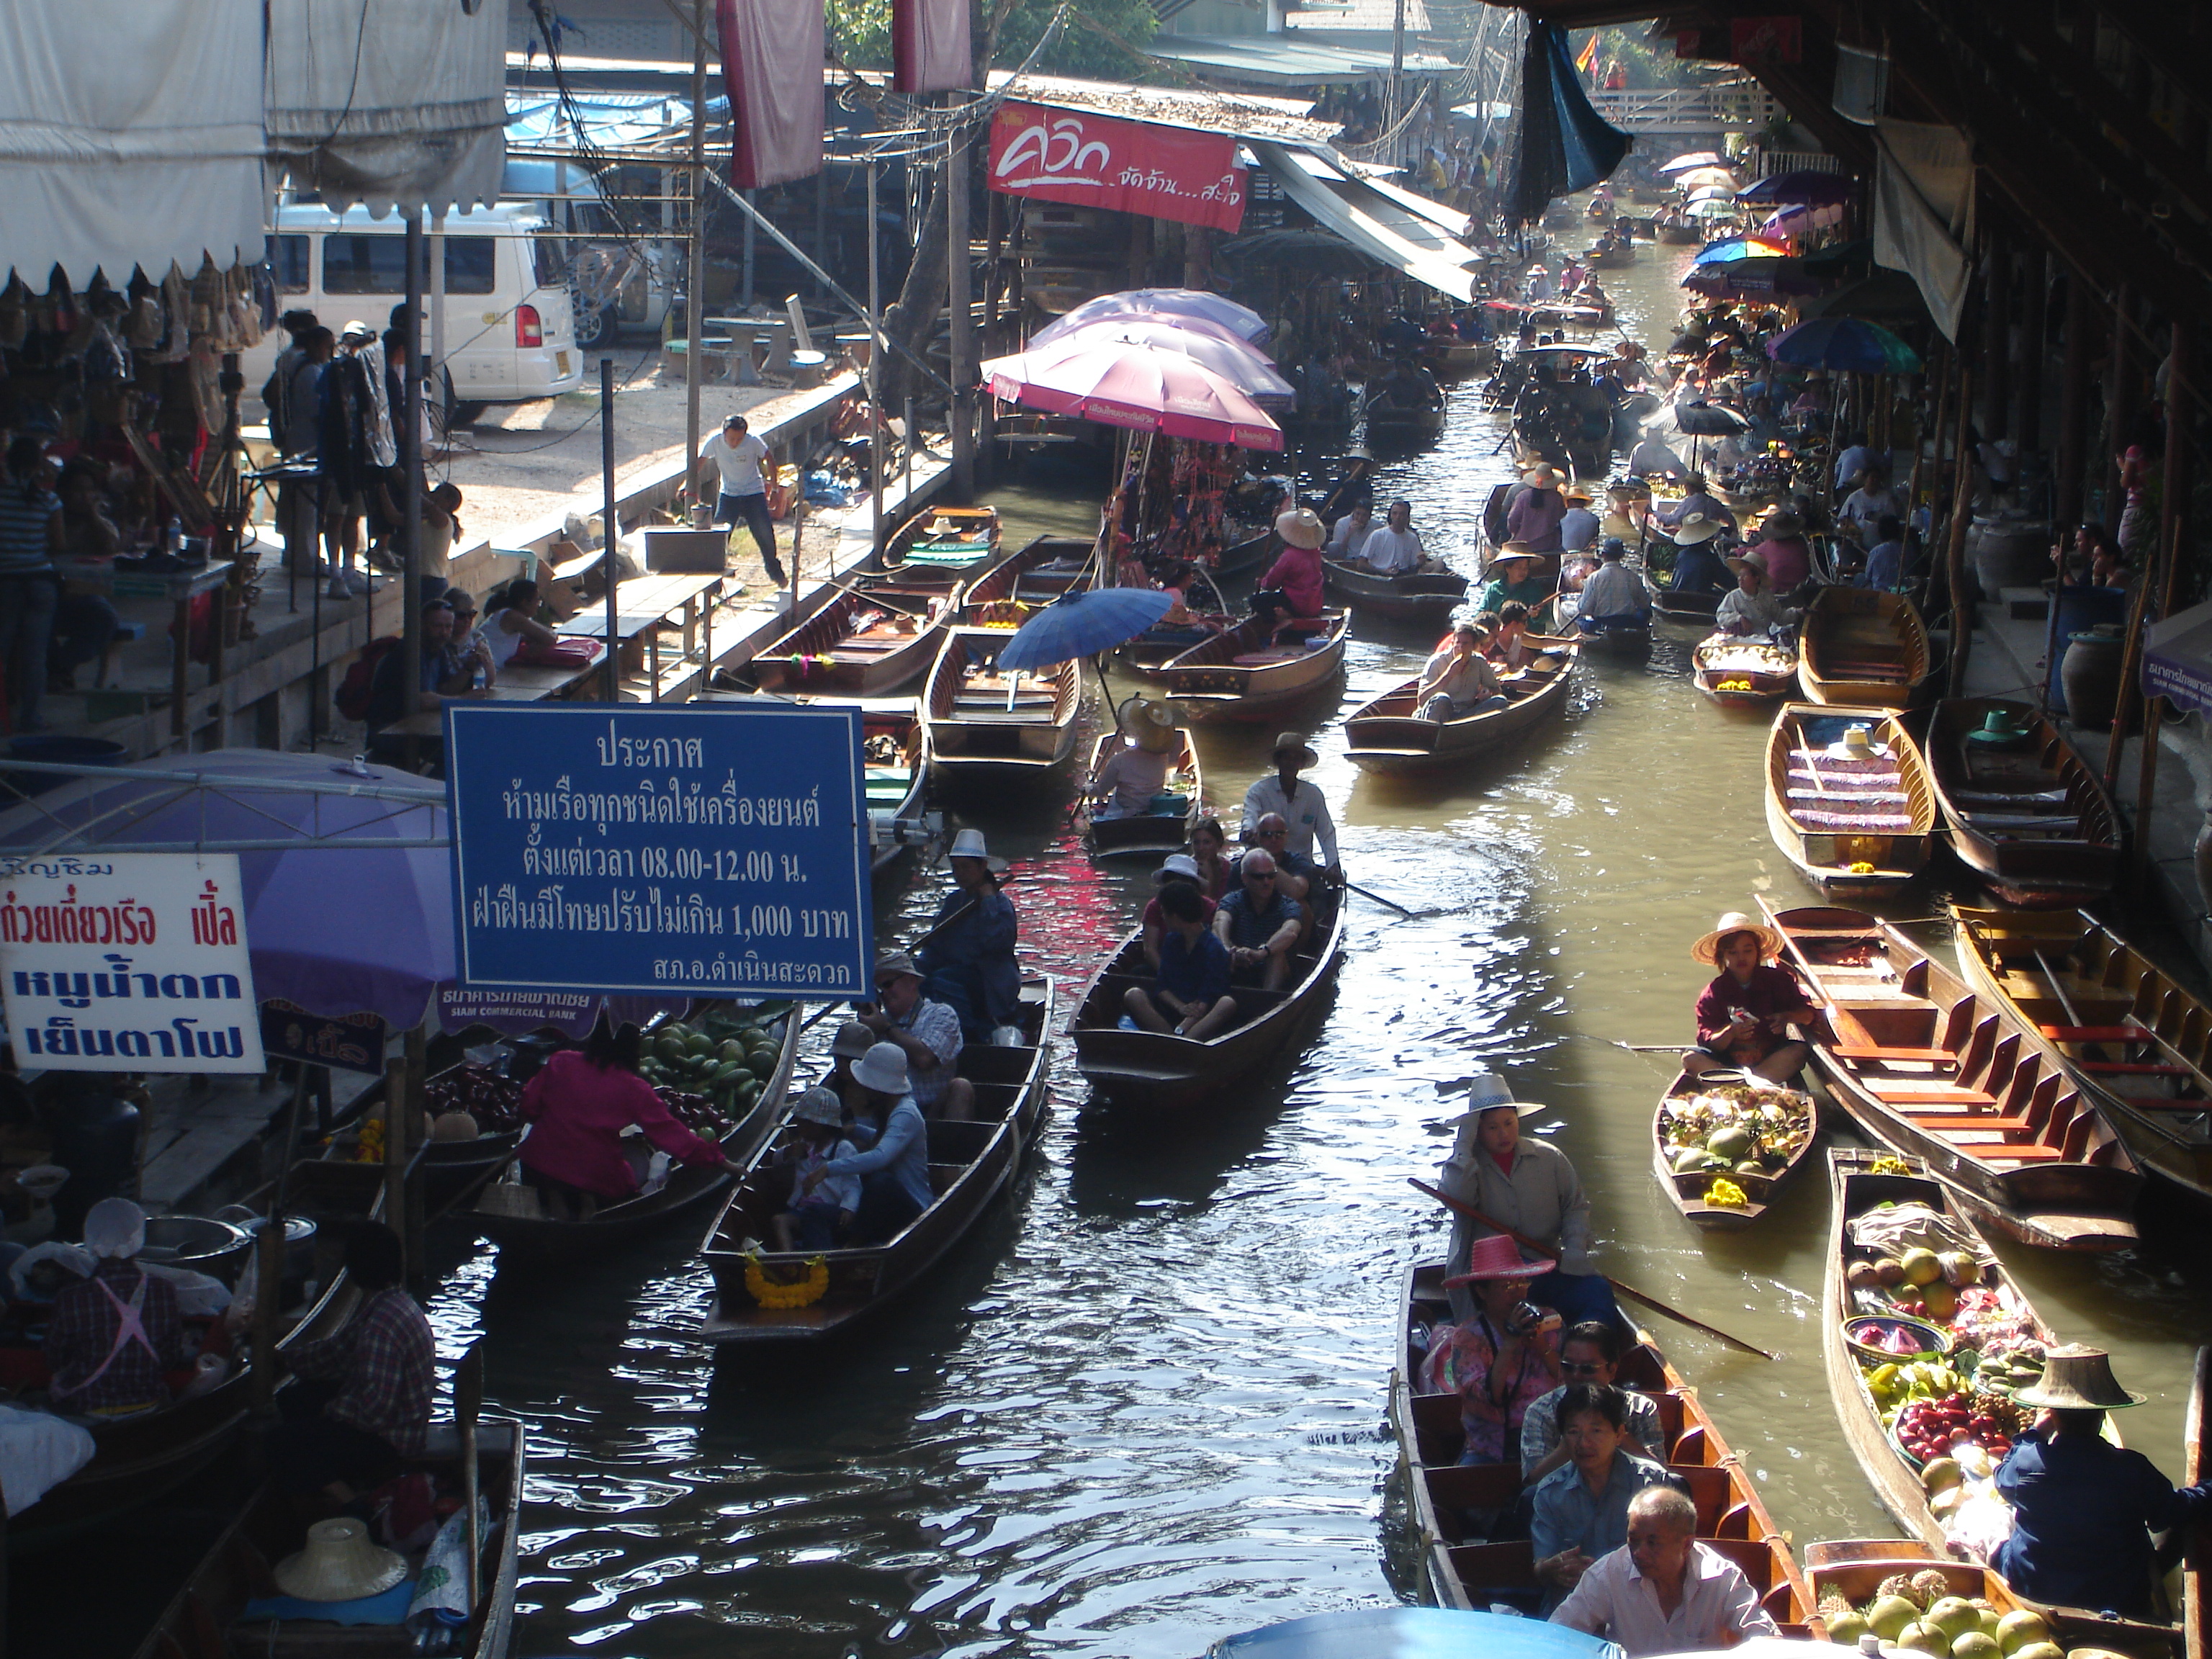 Damnoen Saduak Floating Market about 62 miles (100 kilometers) southwest of Bangkok, Thailand. Photo taken by Mark Joseph Jochim on January 10, 2006.